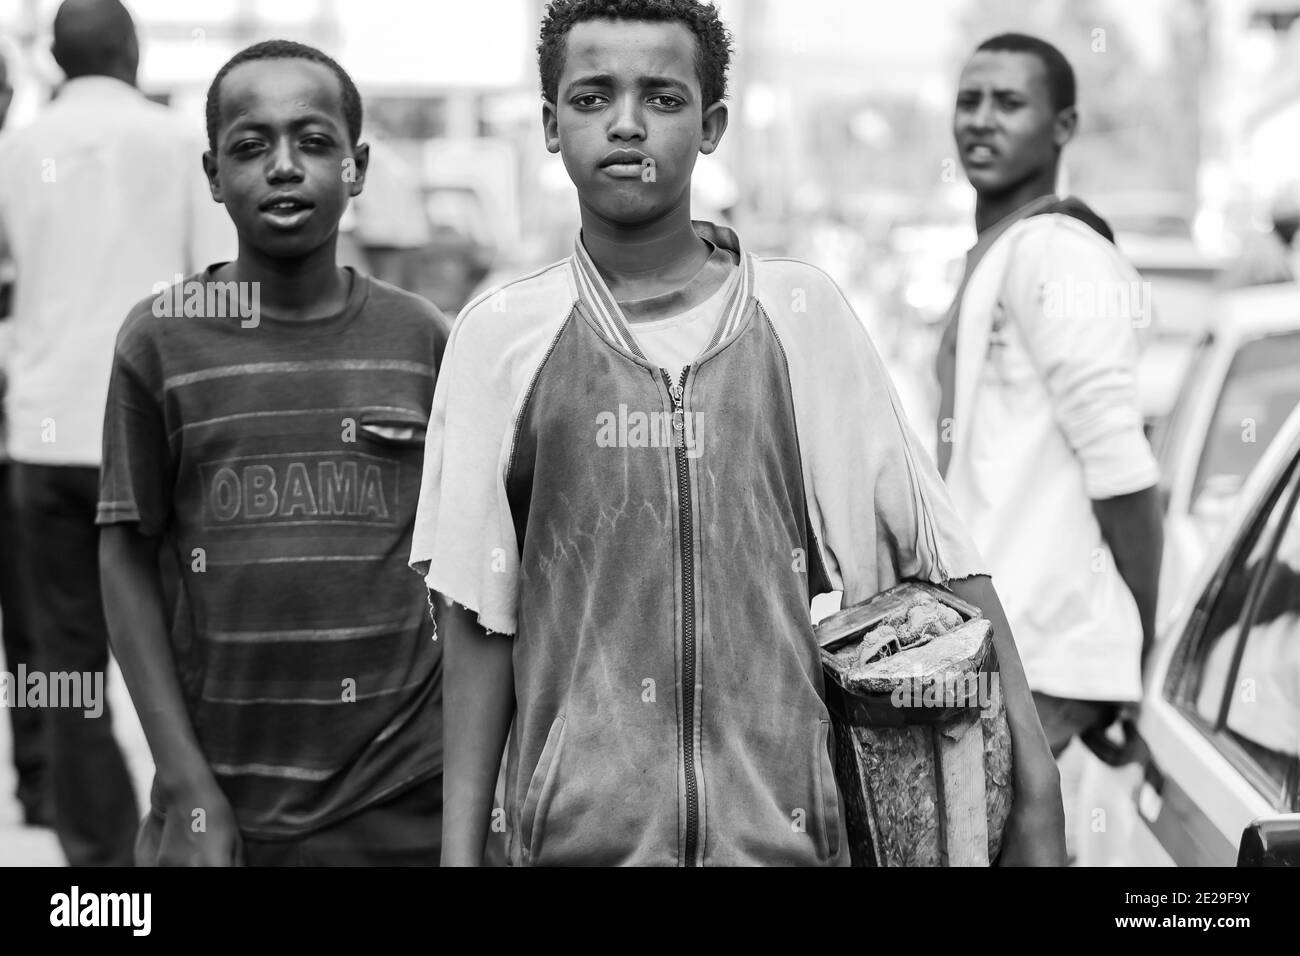 ADDIS ABABA, ETHIOPIA - Jan 05, 2021: Addis Ababa, Ethiopia, January 27, 2014, Children working as shoe shine boys on the street, looking straight at Stock Photo